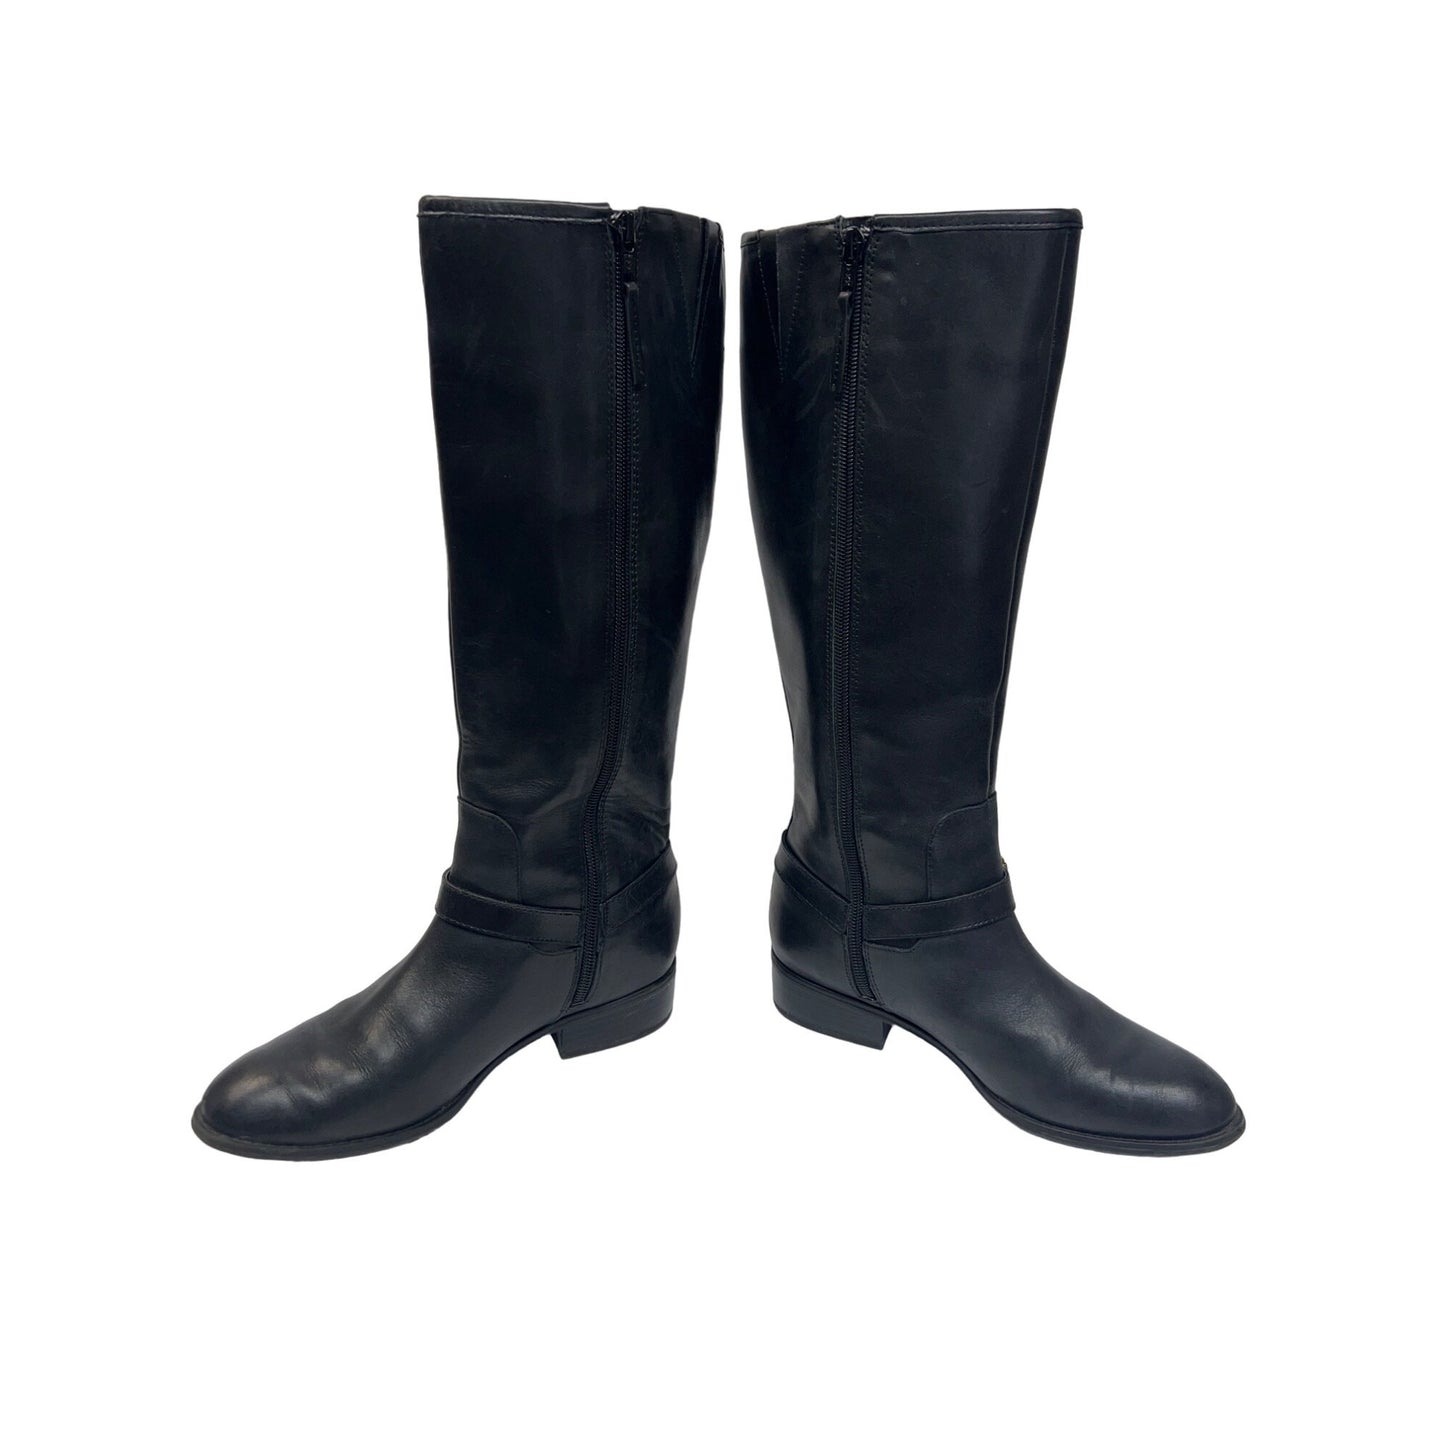 Lauren Ralph Lauren Marion Tall Black Leather Riding Boots